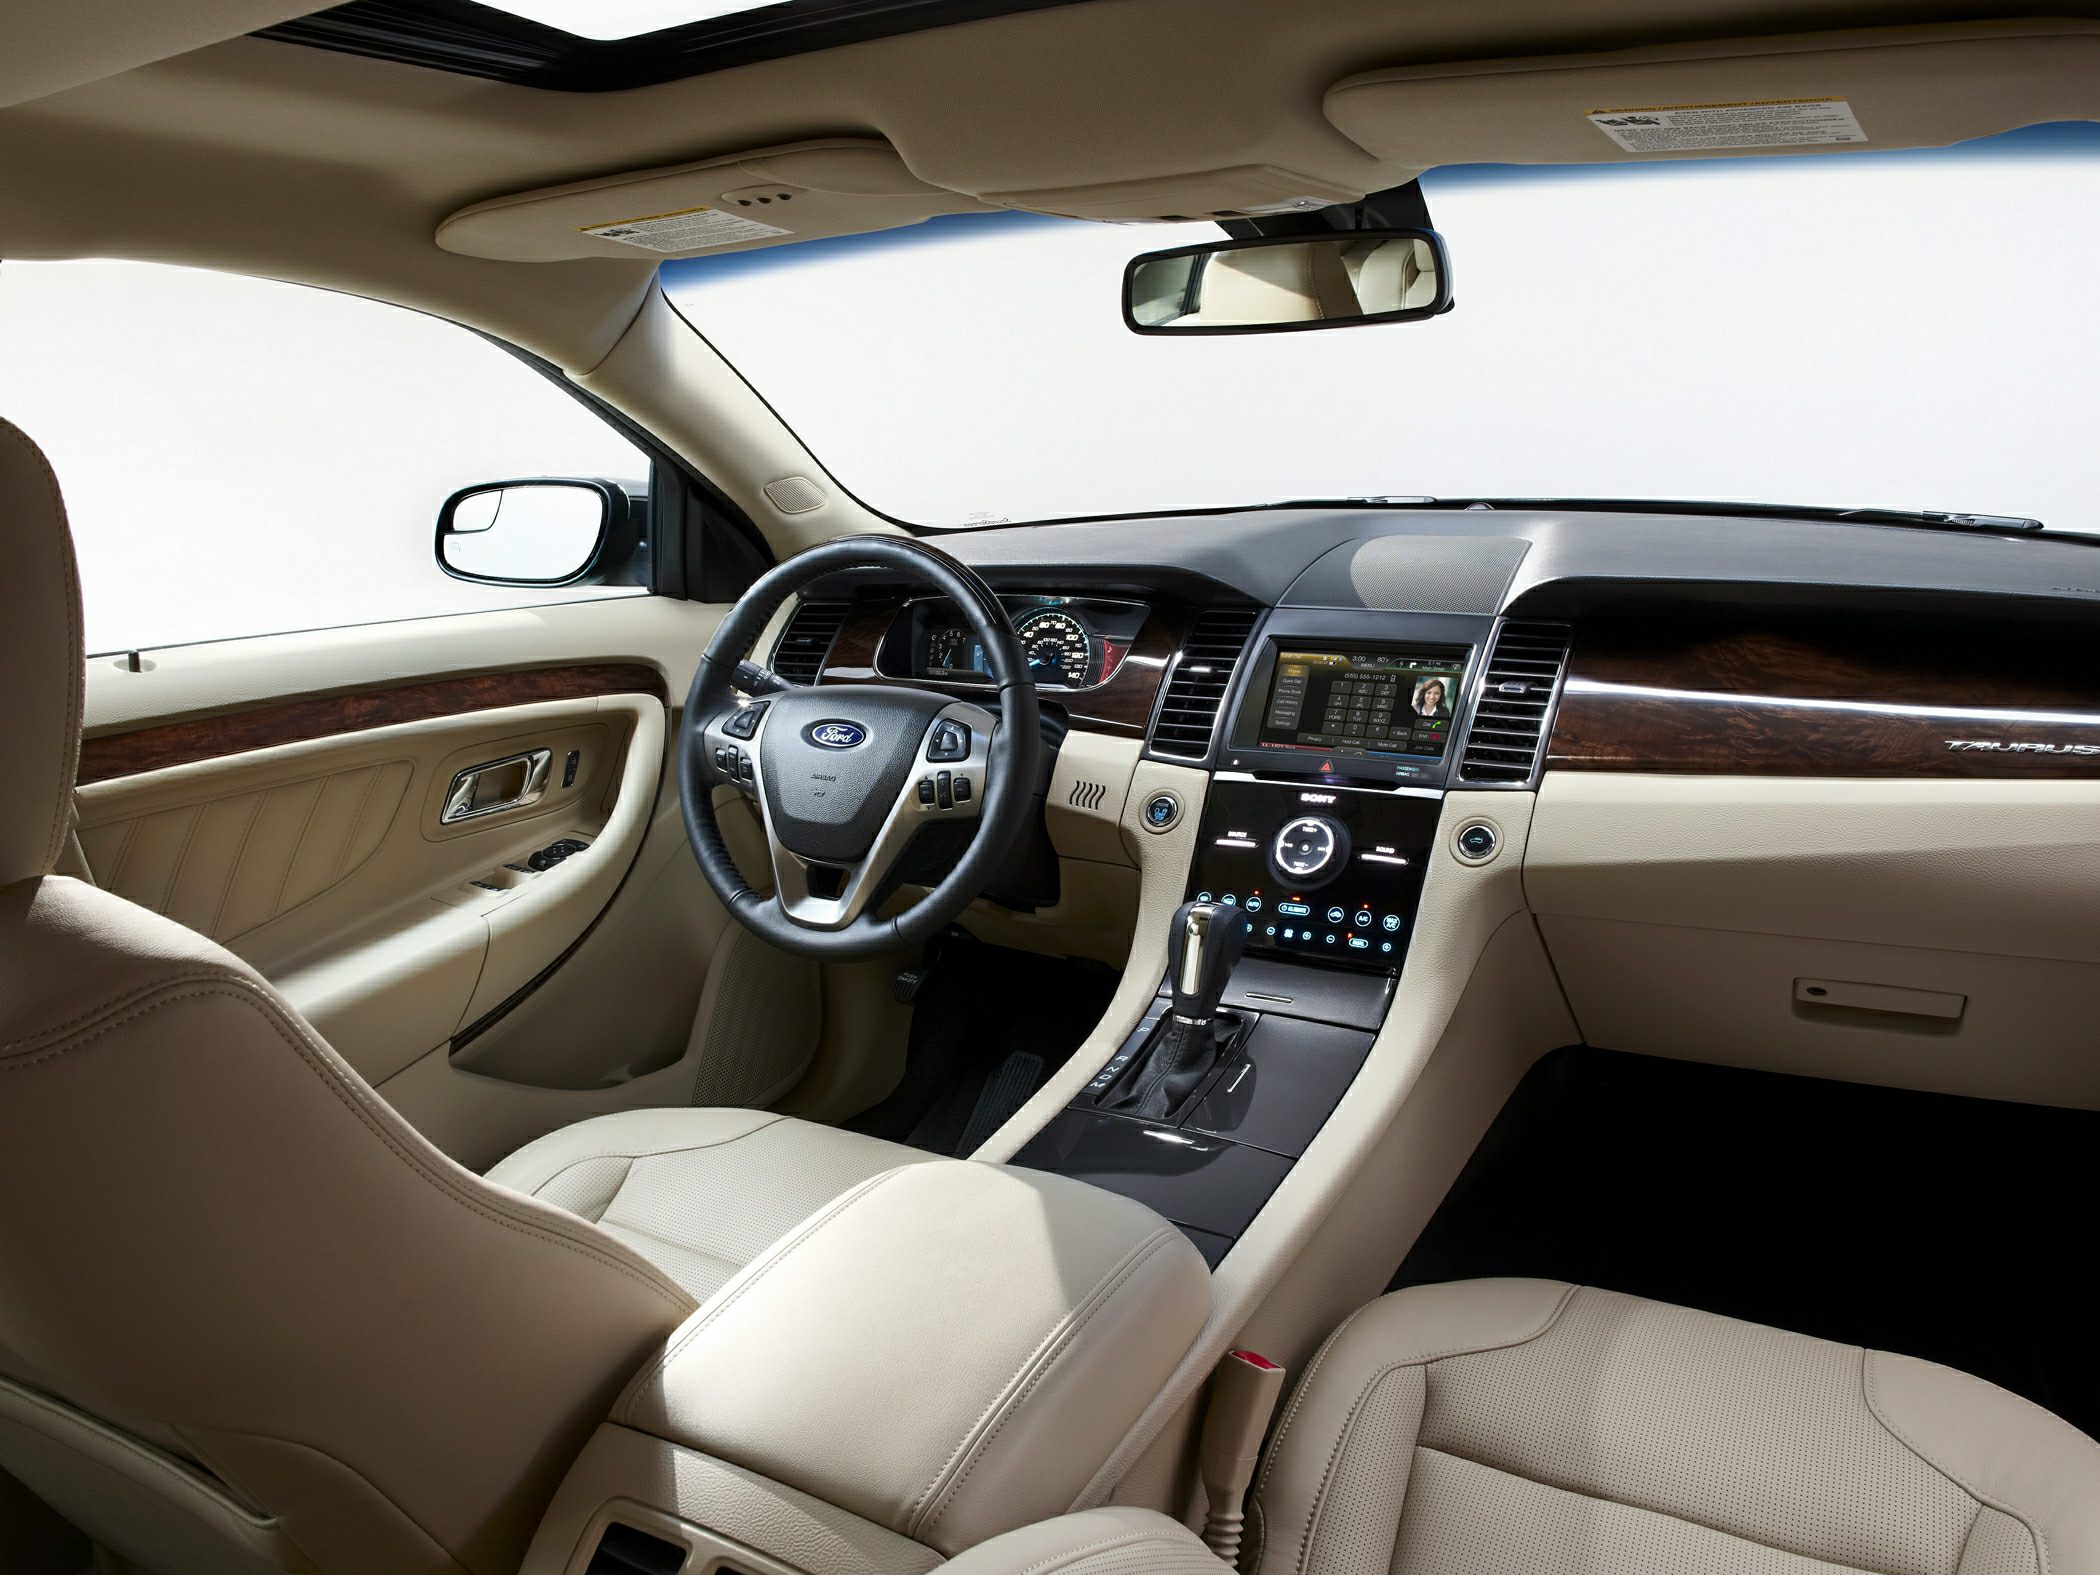 2014 Toyota Avalon and Ford Taurus interiors